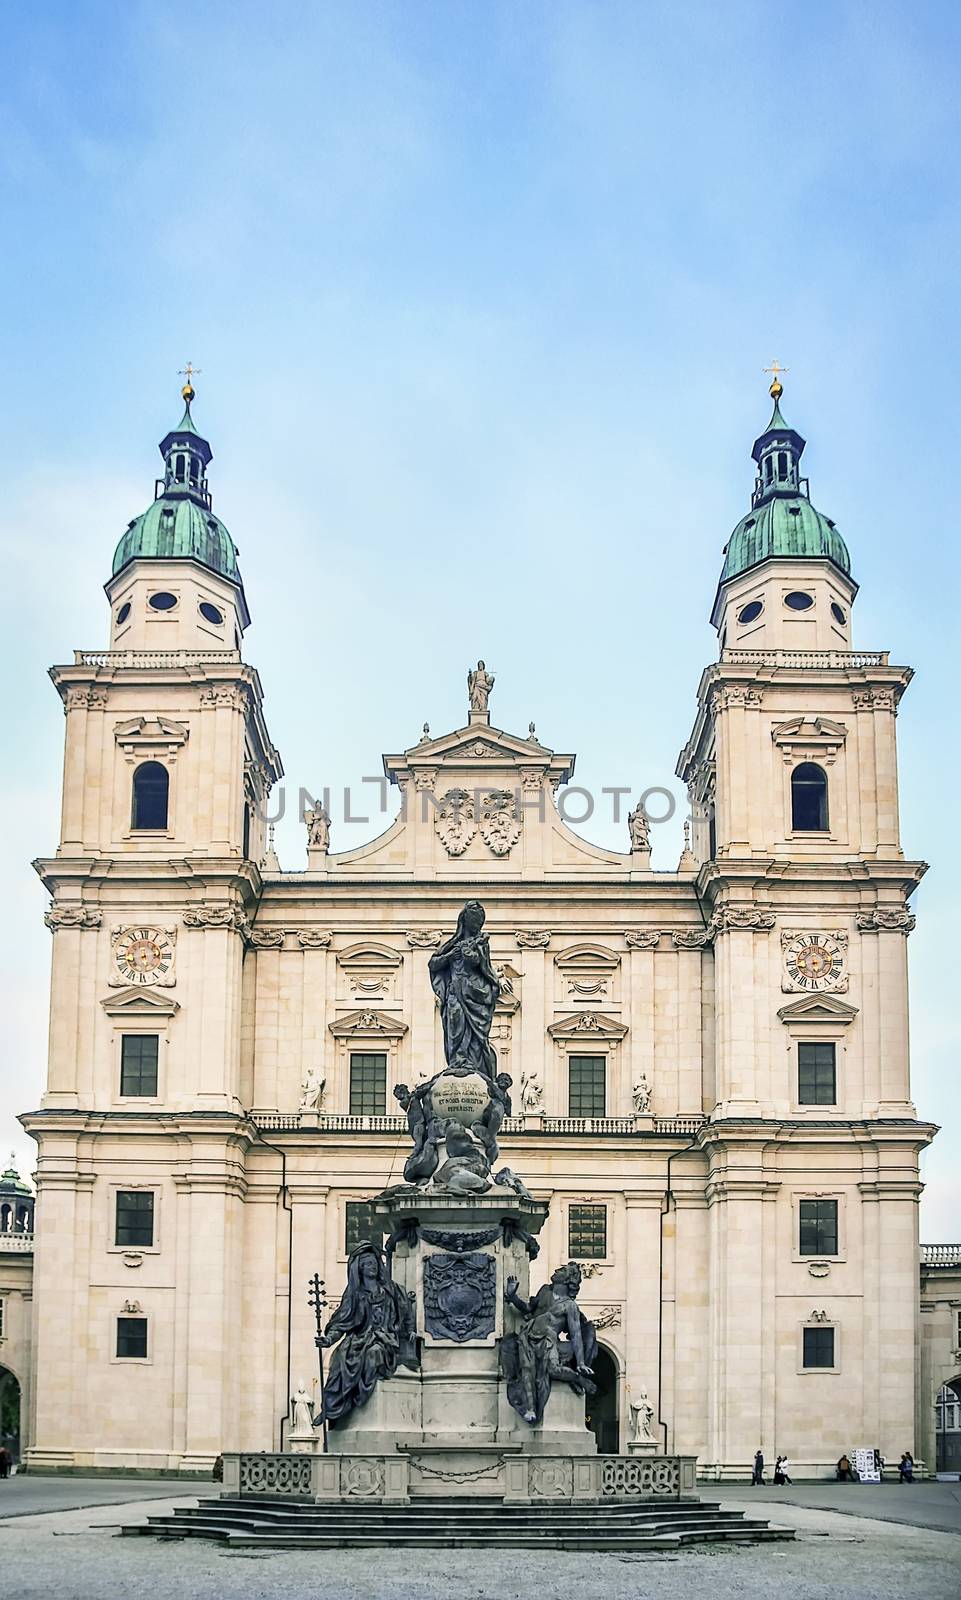 Salzburg Cathedral, Austria by borisb17